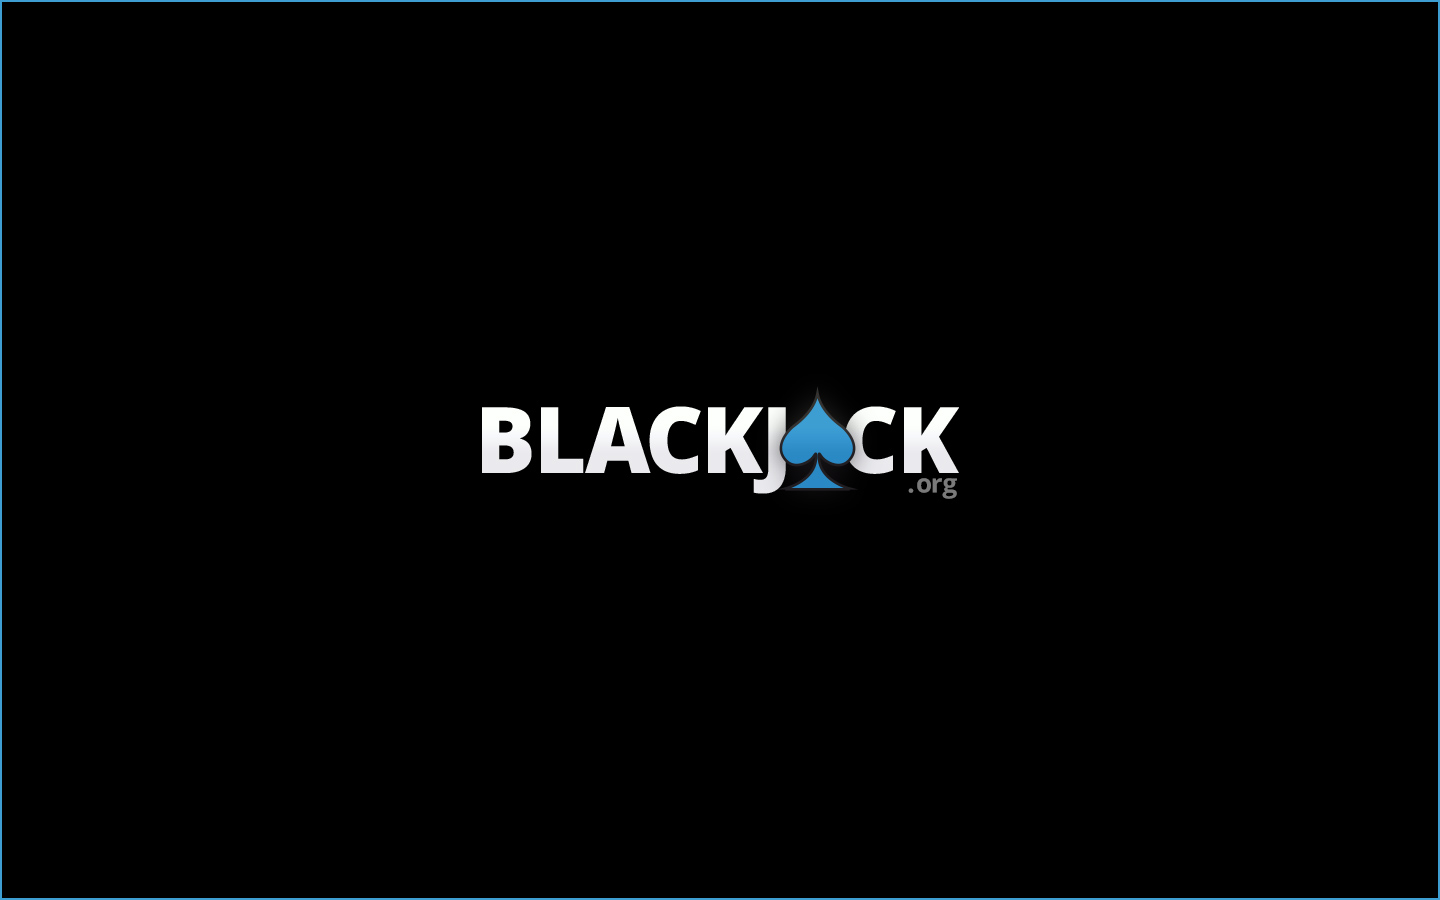 Blackjack.org Resurrected for Next-Gen Internet Users